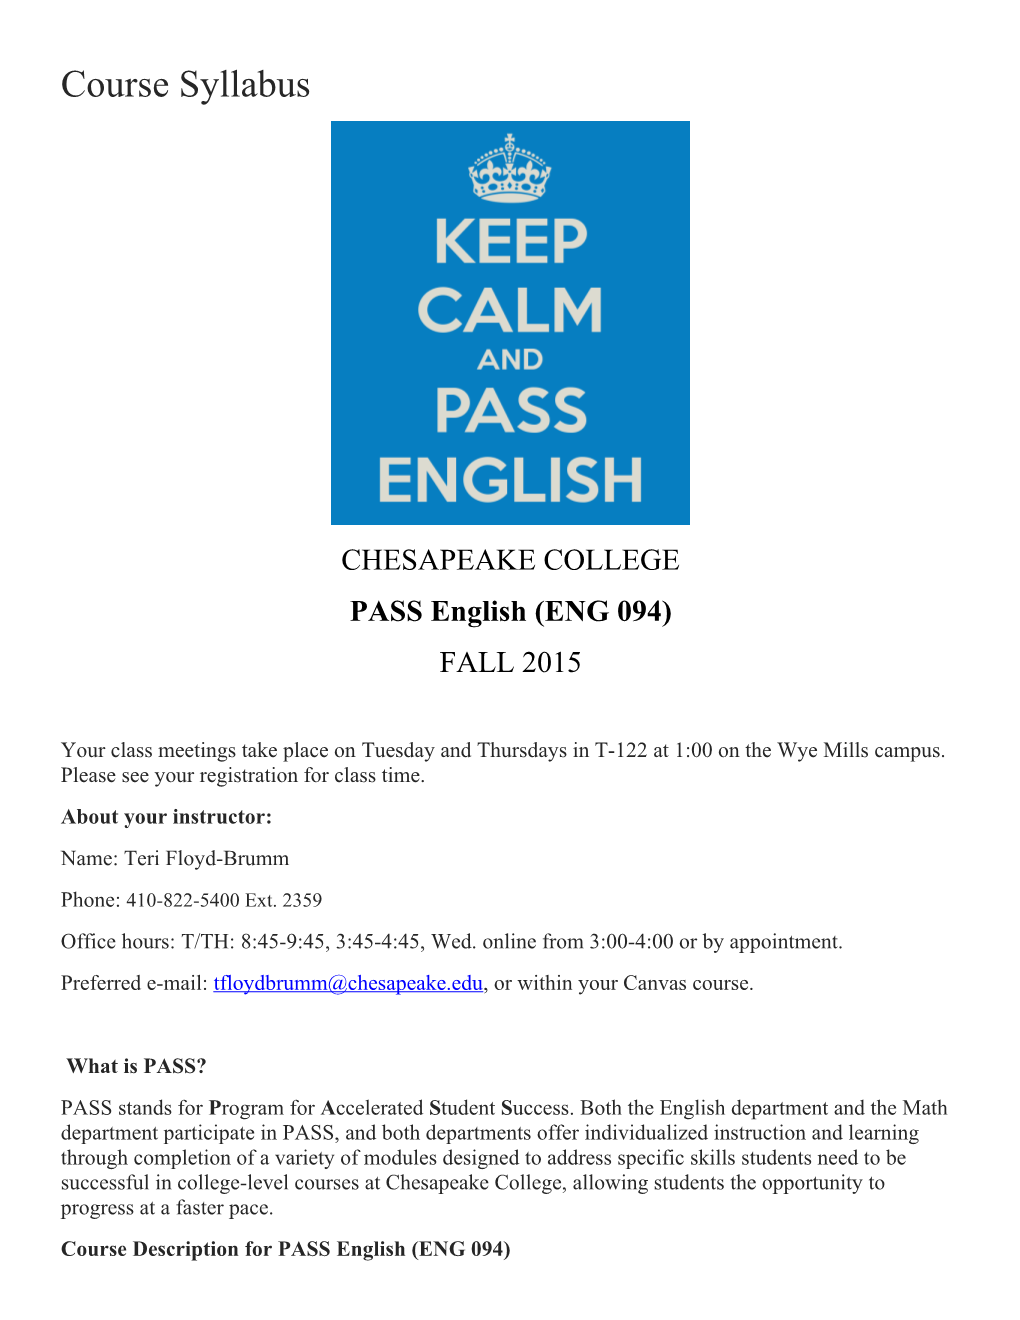 PASS English (ENG 094)